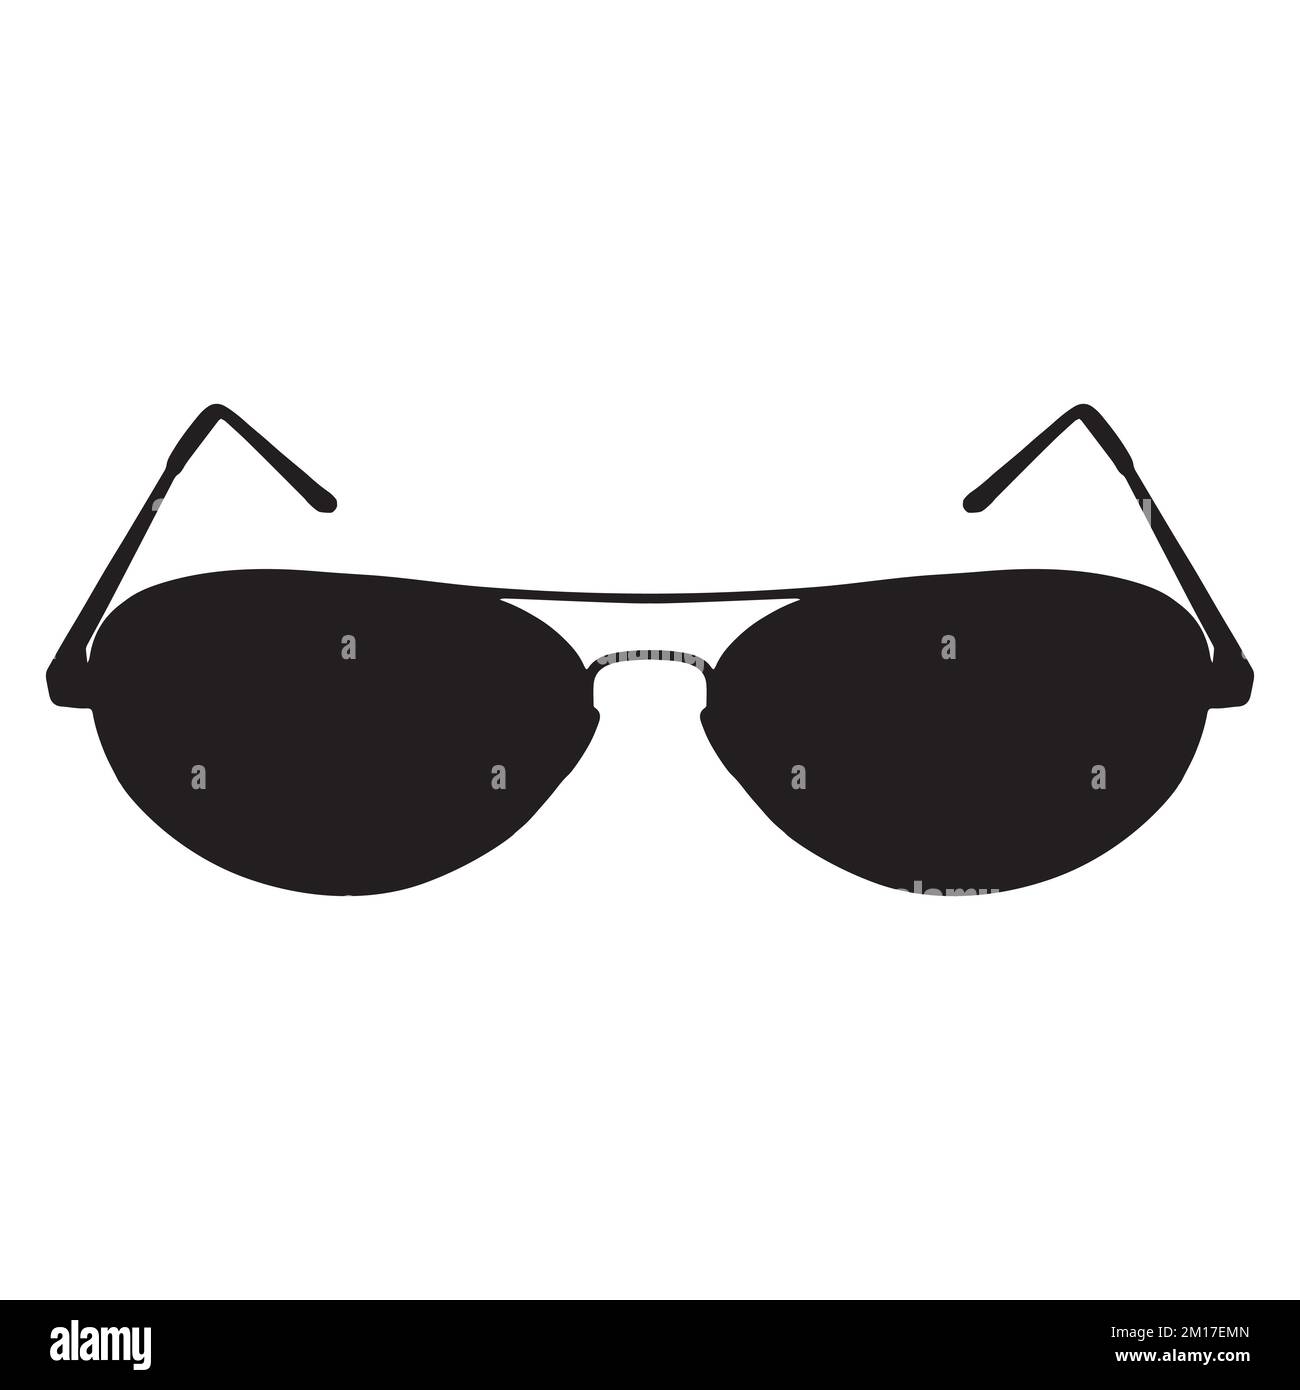 Vector Illustration of Sunglasses Silhouette Art Stock Vector Image ...